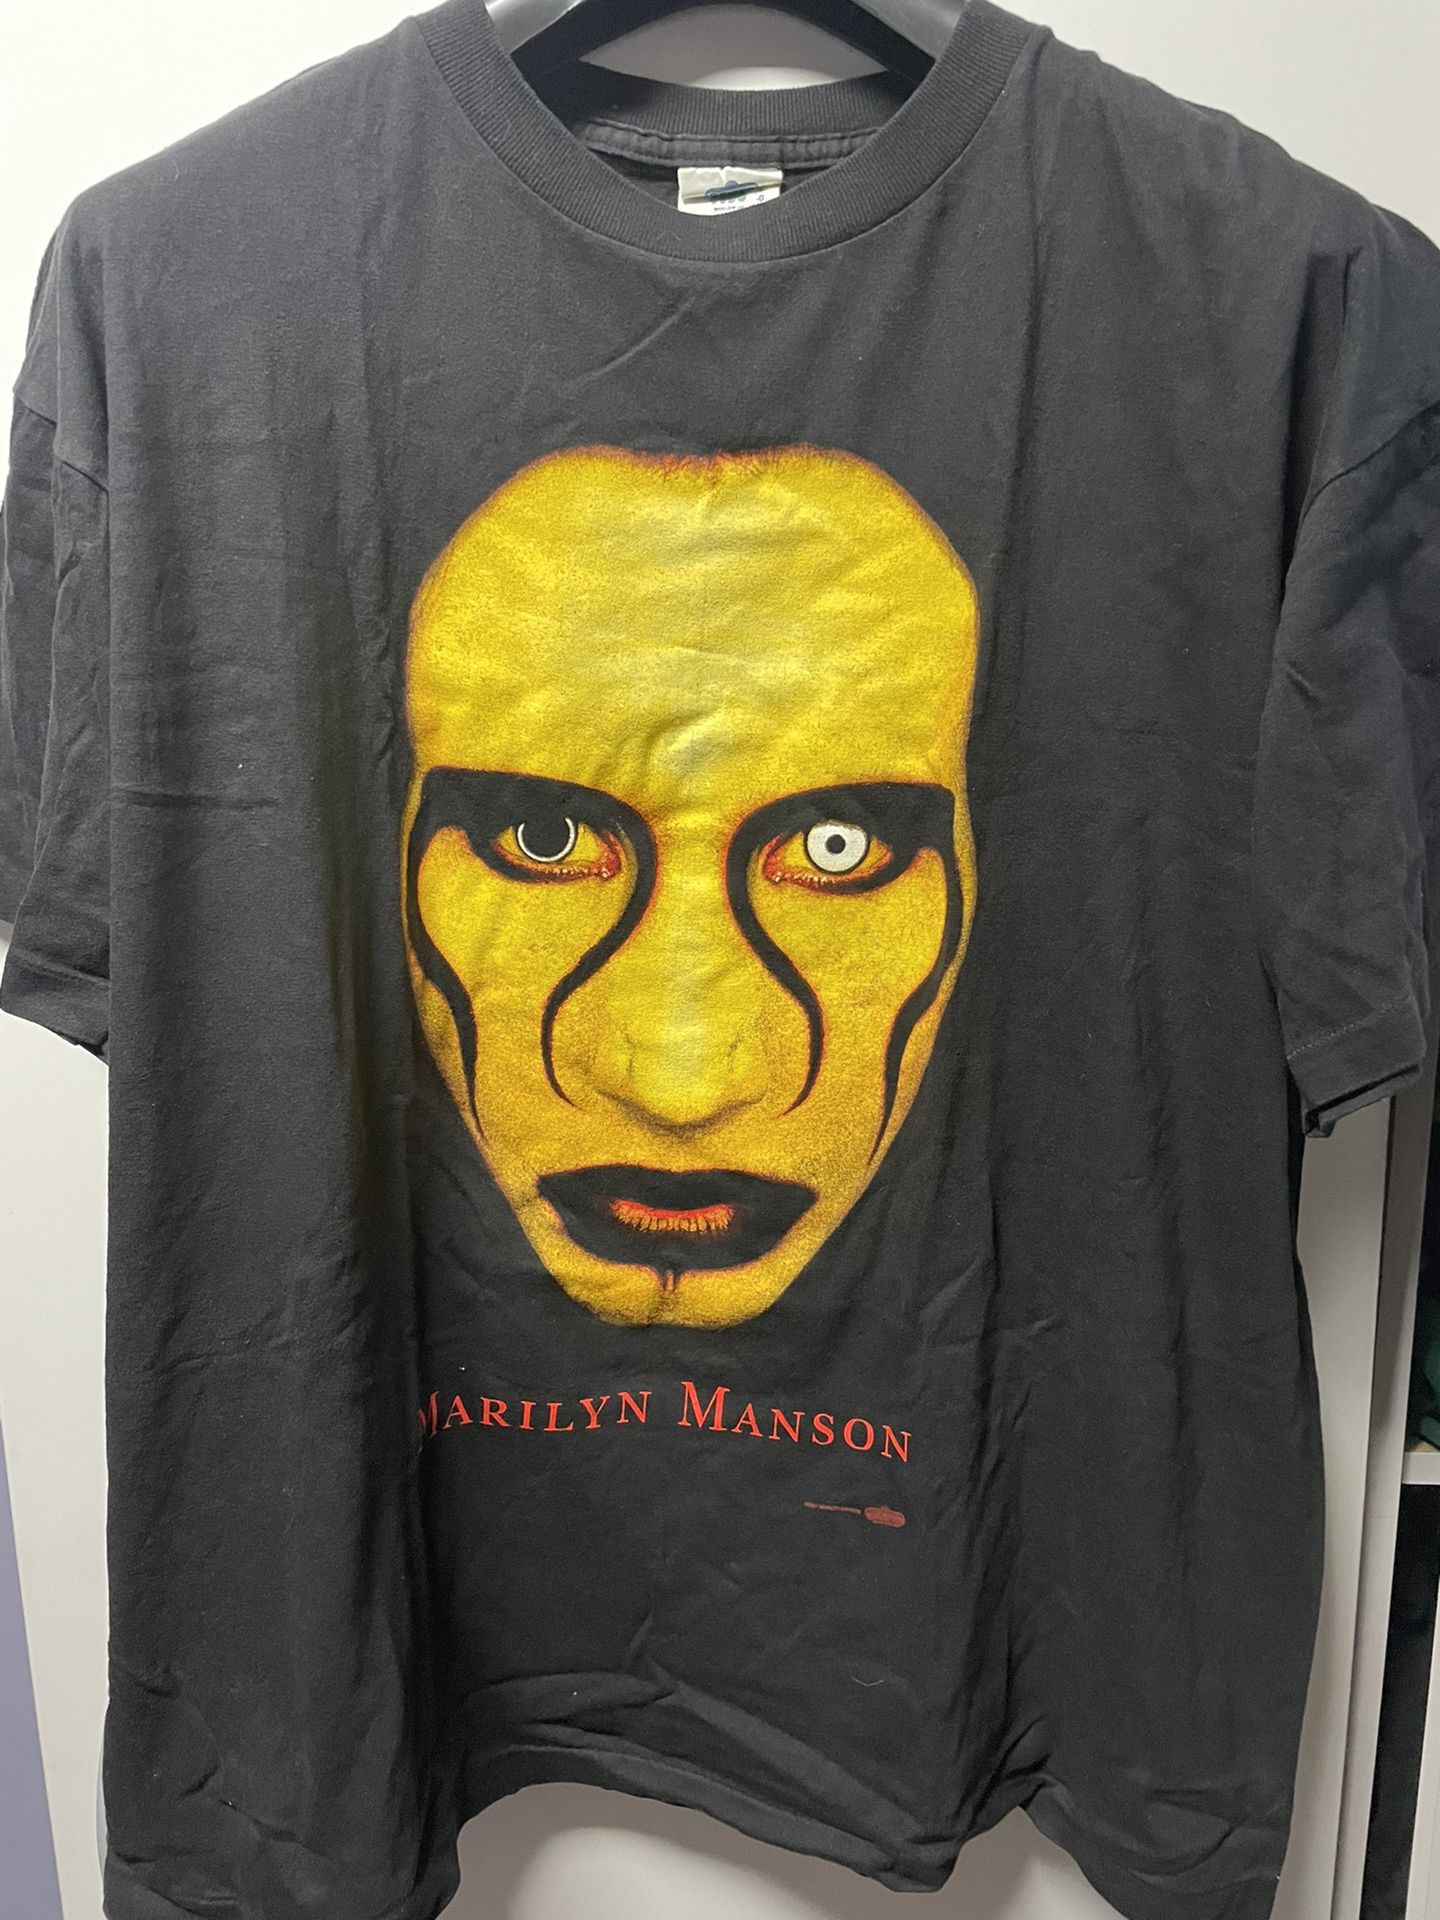 Rare Marilyn Manson Shirt